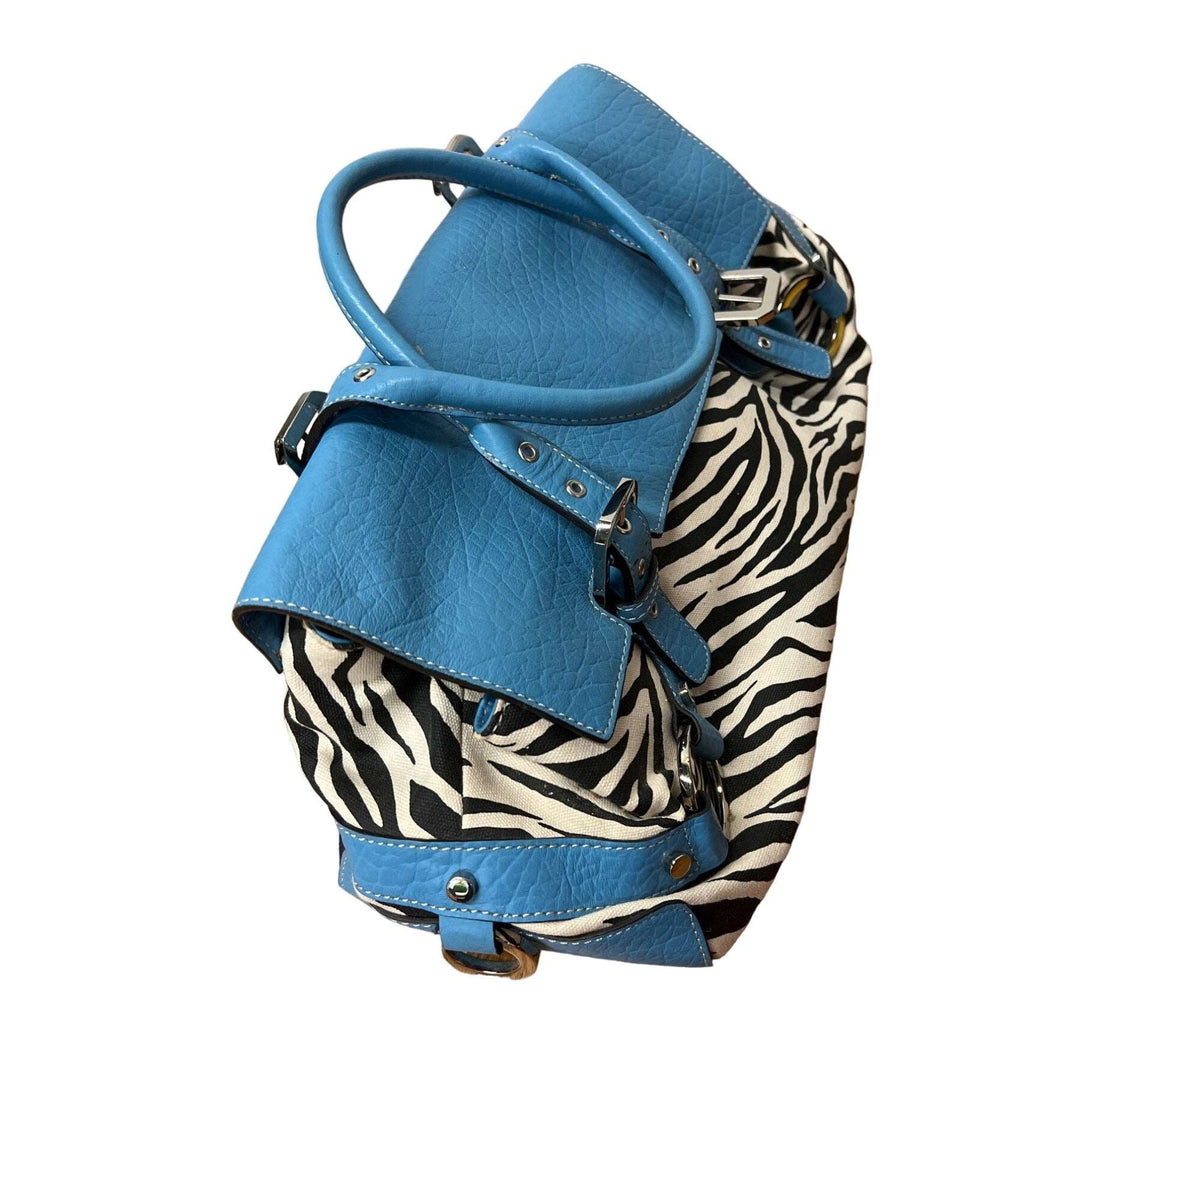 Adrienne Vittadini's Kayla: Eye-catching Blue Zebra Print Satchel Bag